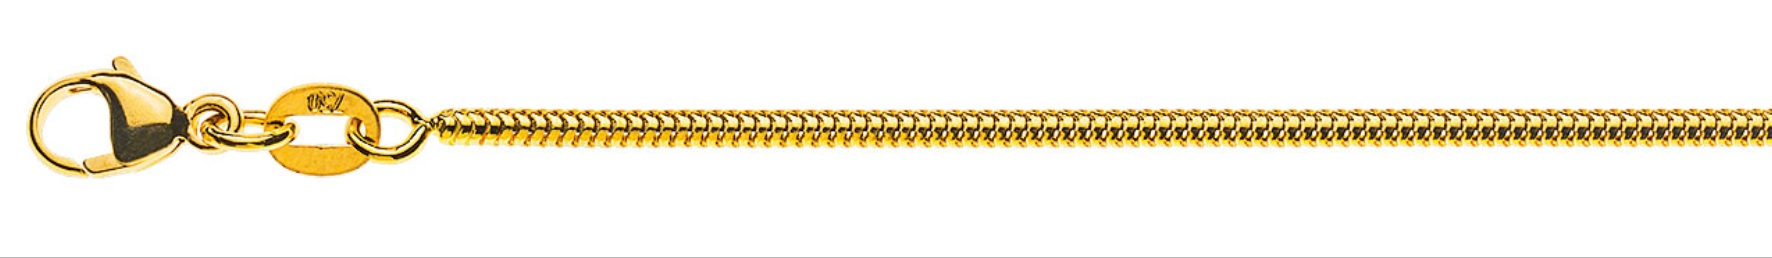 AURONOS Prestige Collier en or jaune 18K serpent 40cm 1.6mm